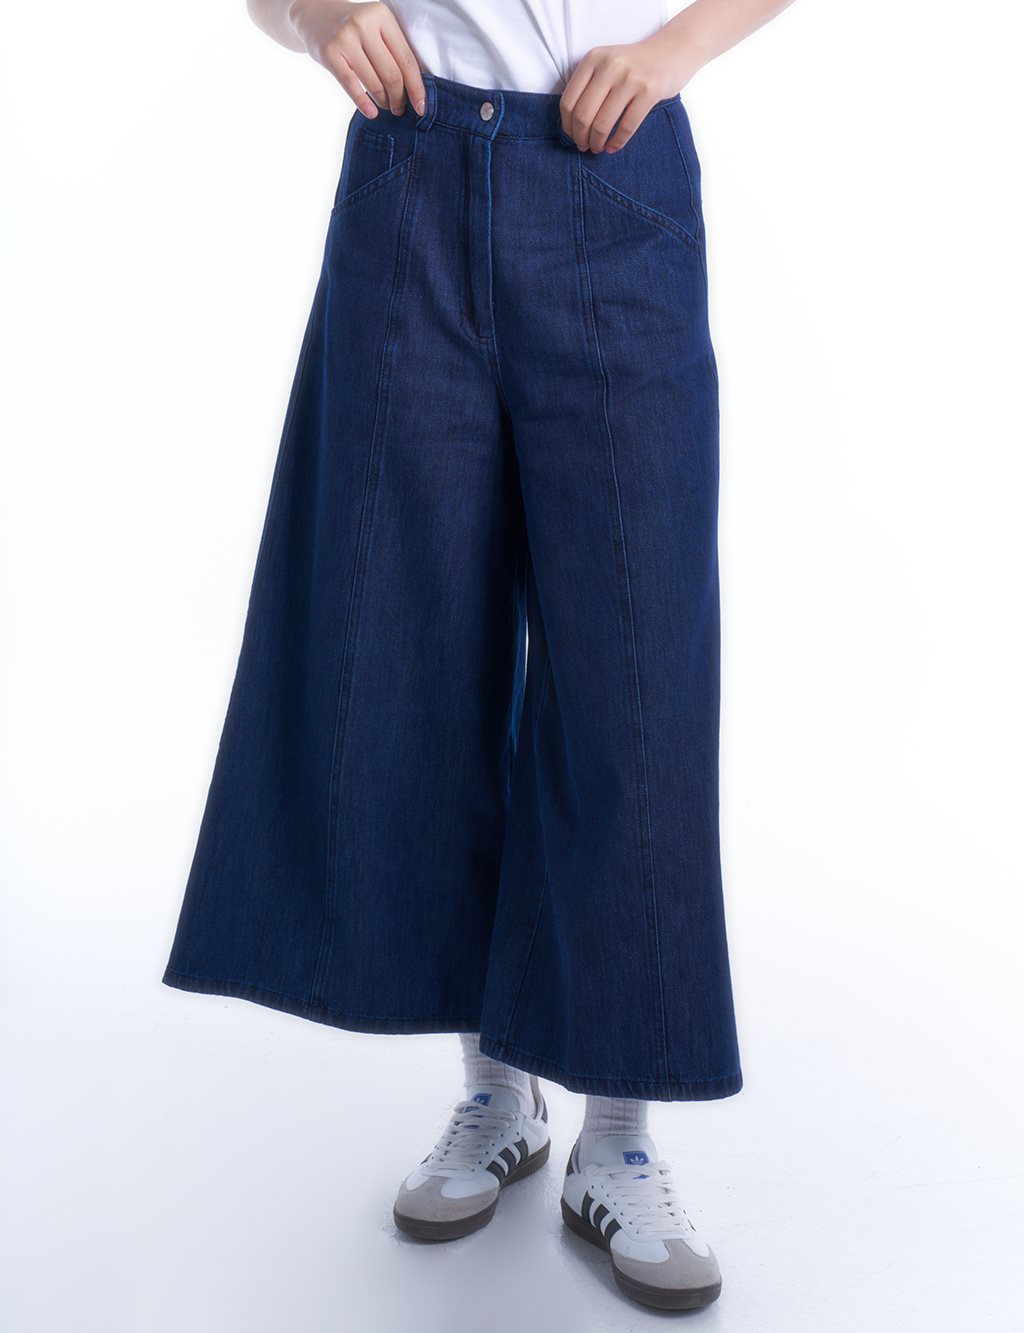 Elastic Waist Denim Skirt Trousers Optical Navy Blue